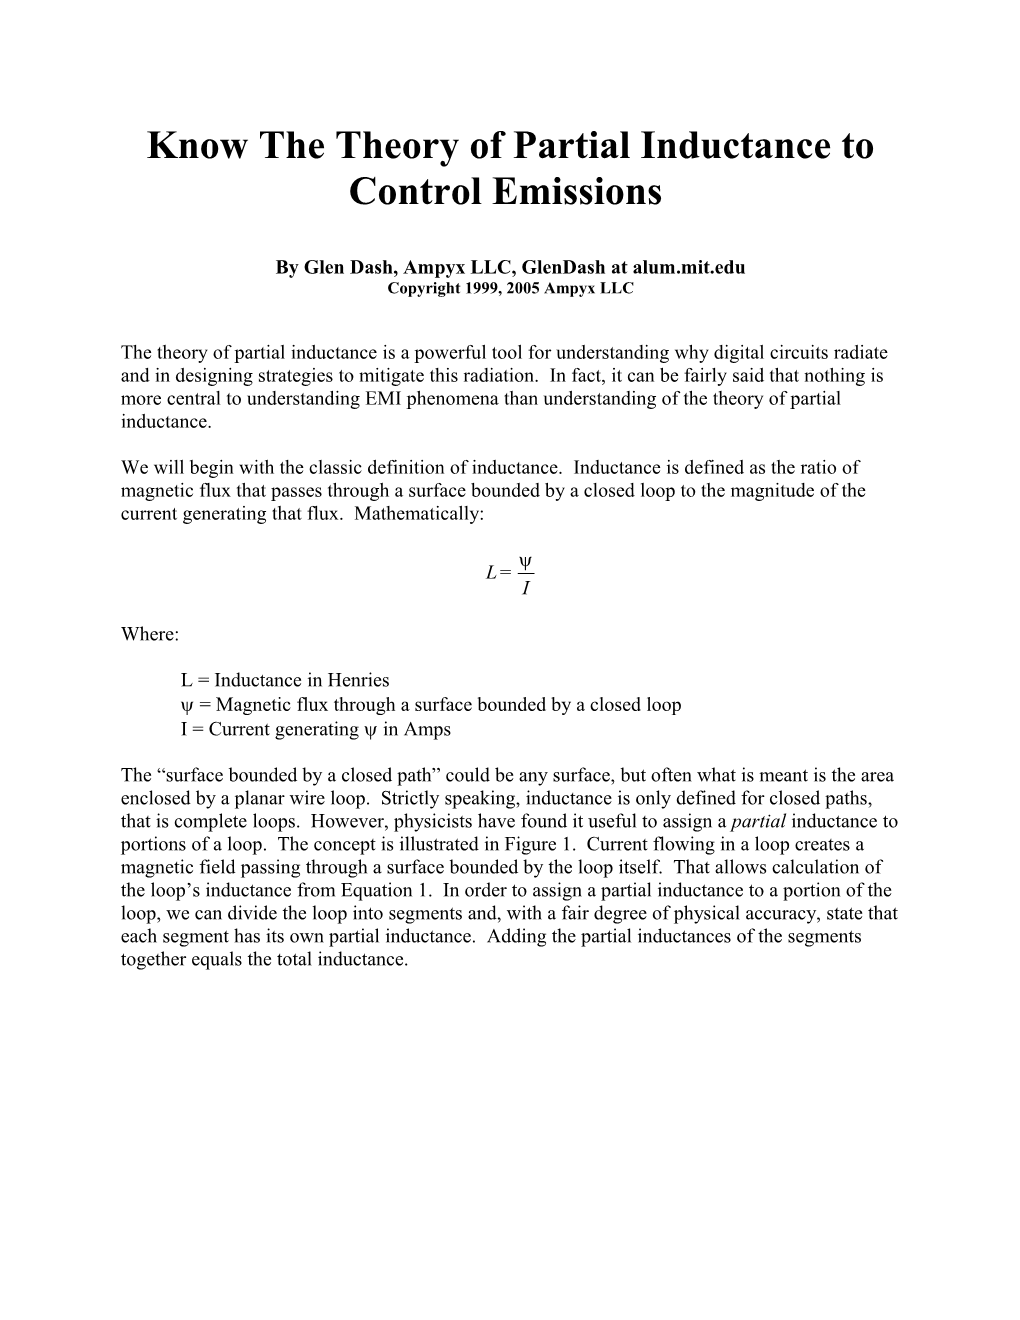 Know Partial Inductances to Control Emissions